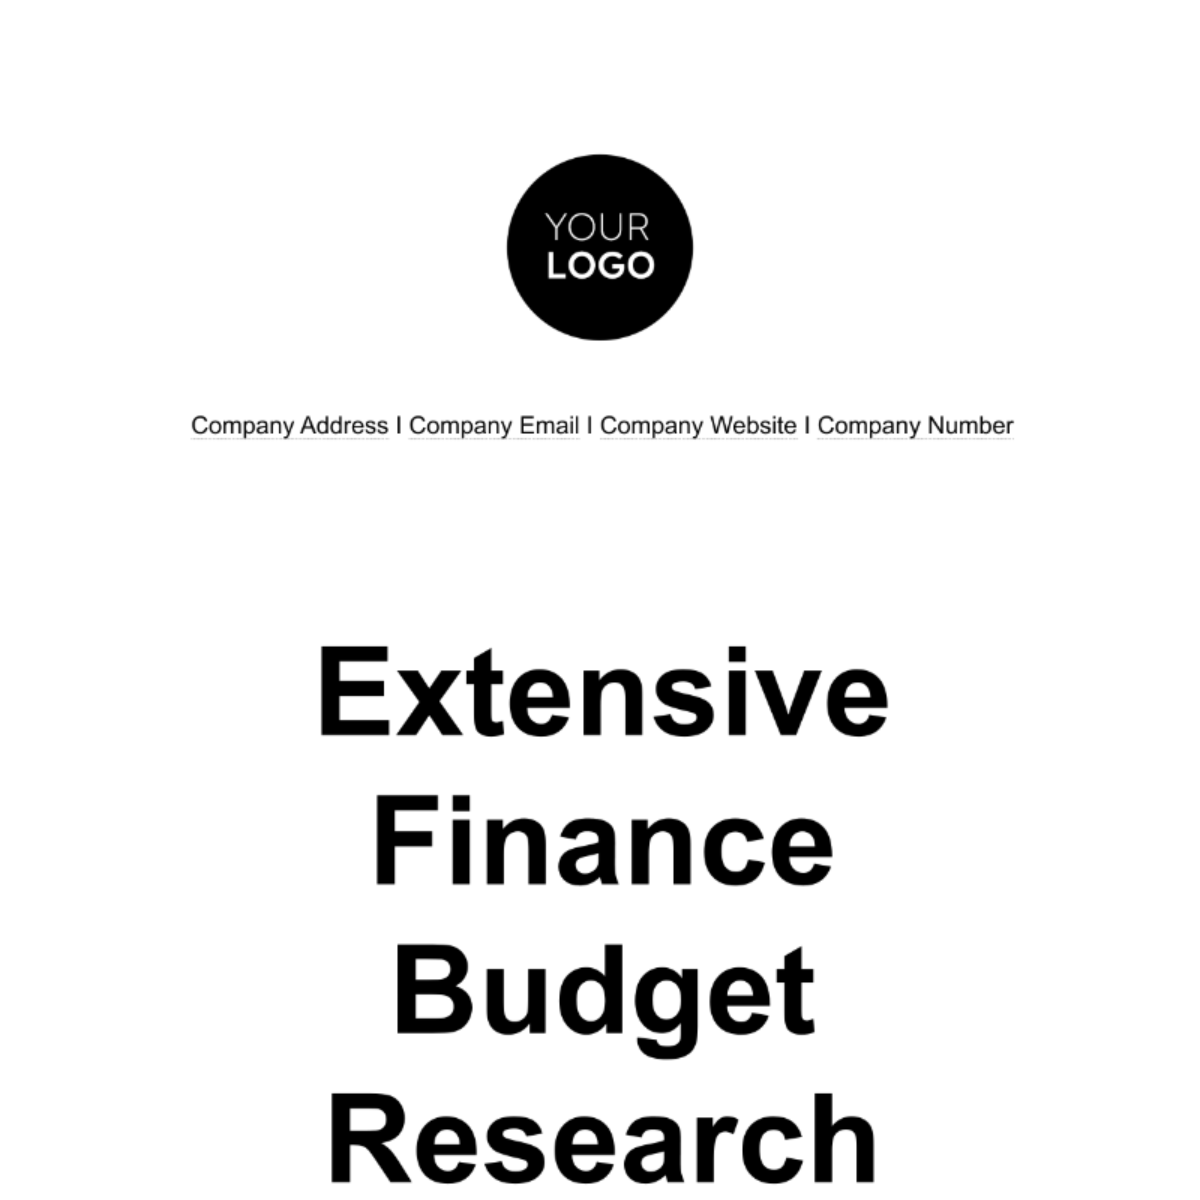 Extensive Finance Budget Research Template